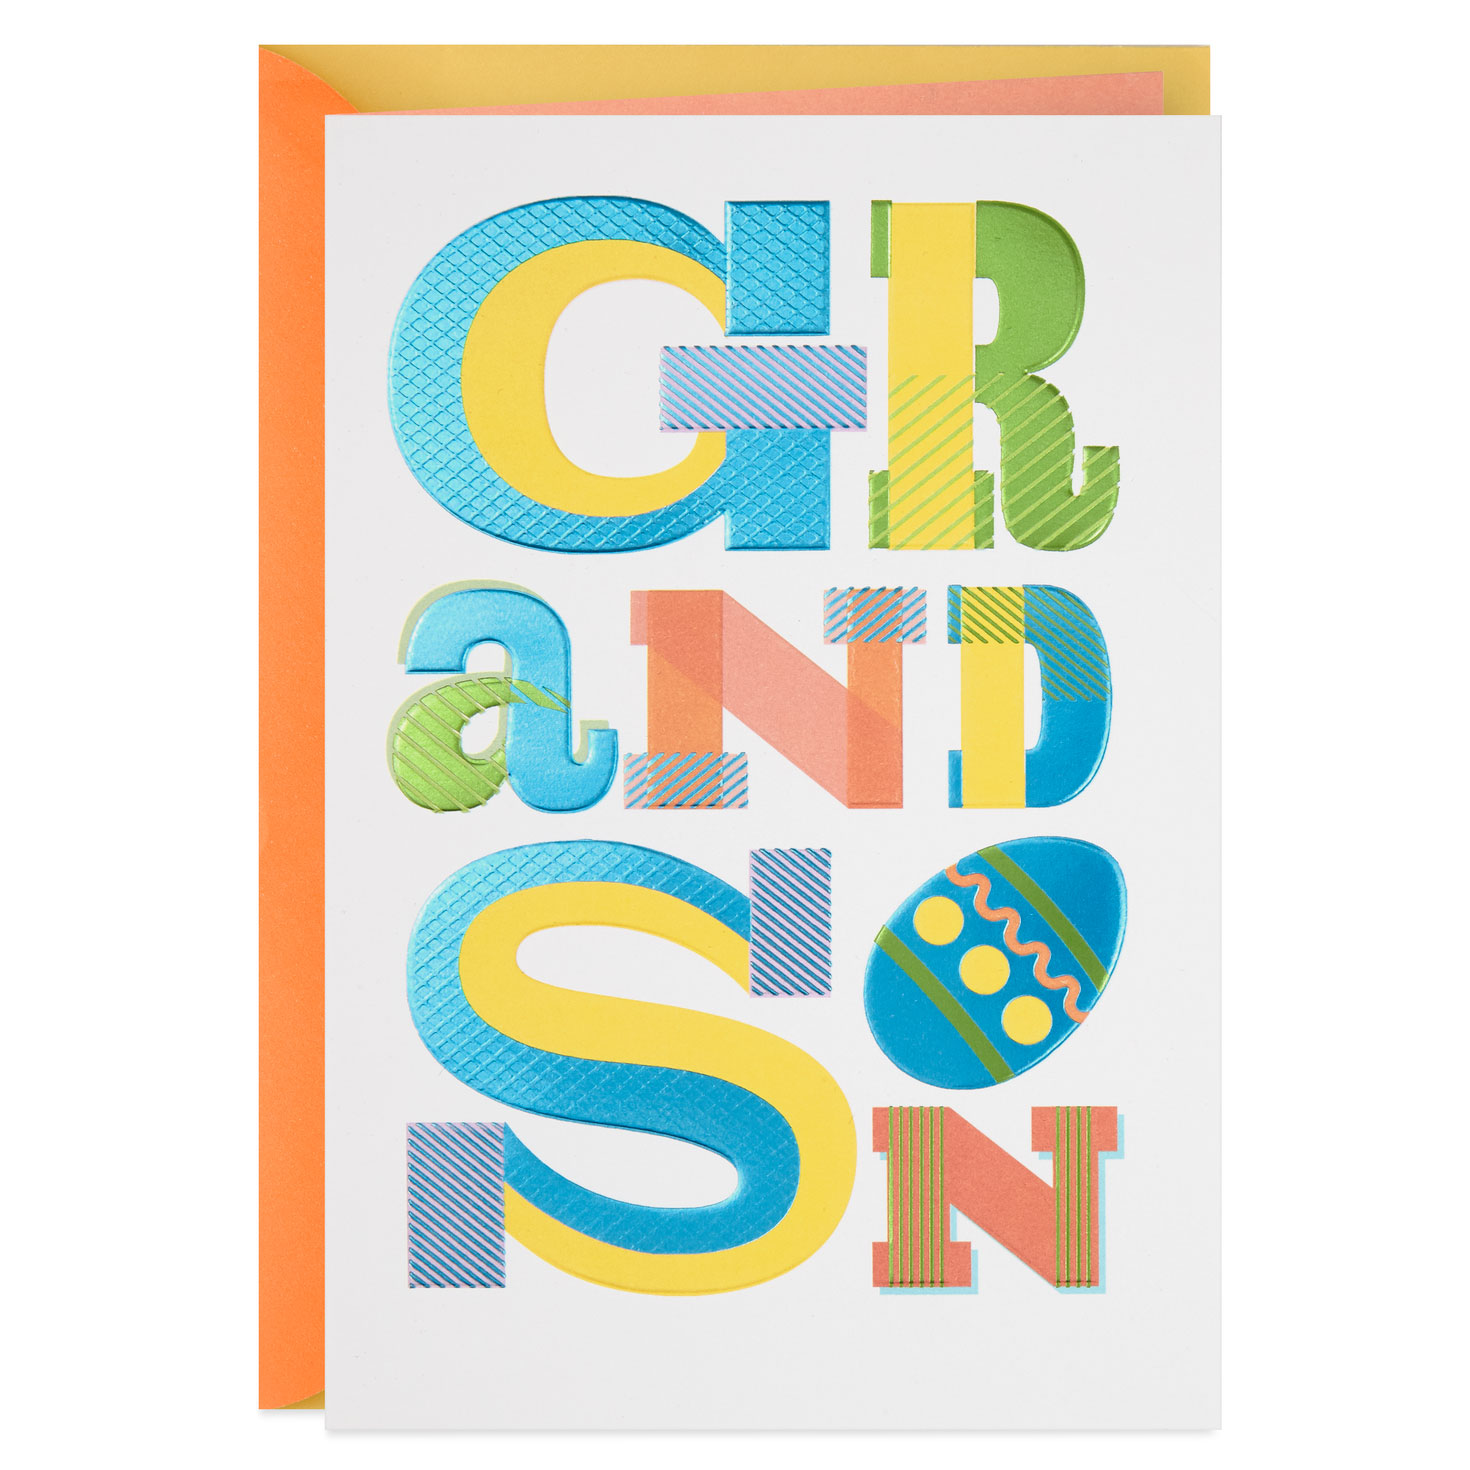 Hallmark Easter Card for Grandson Appreciation at Easter